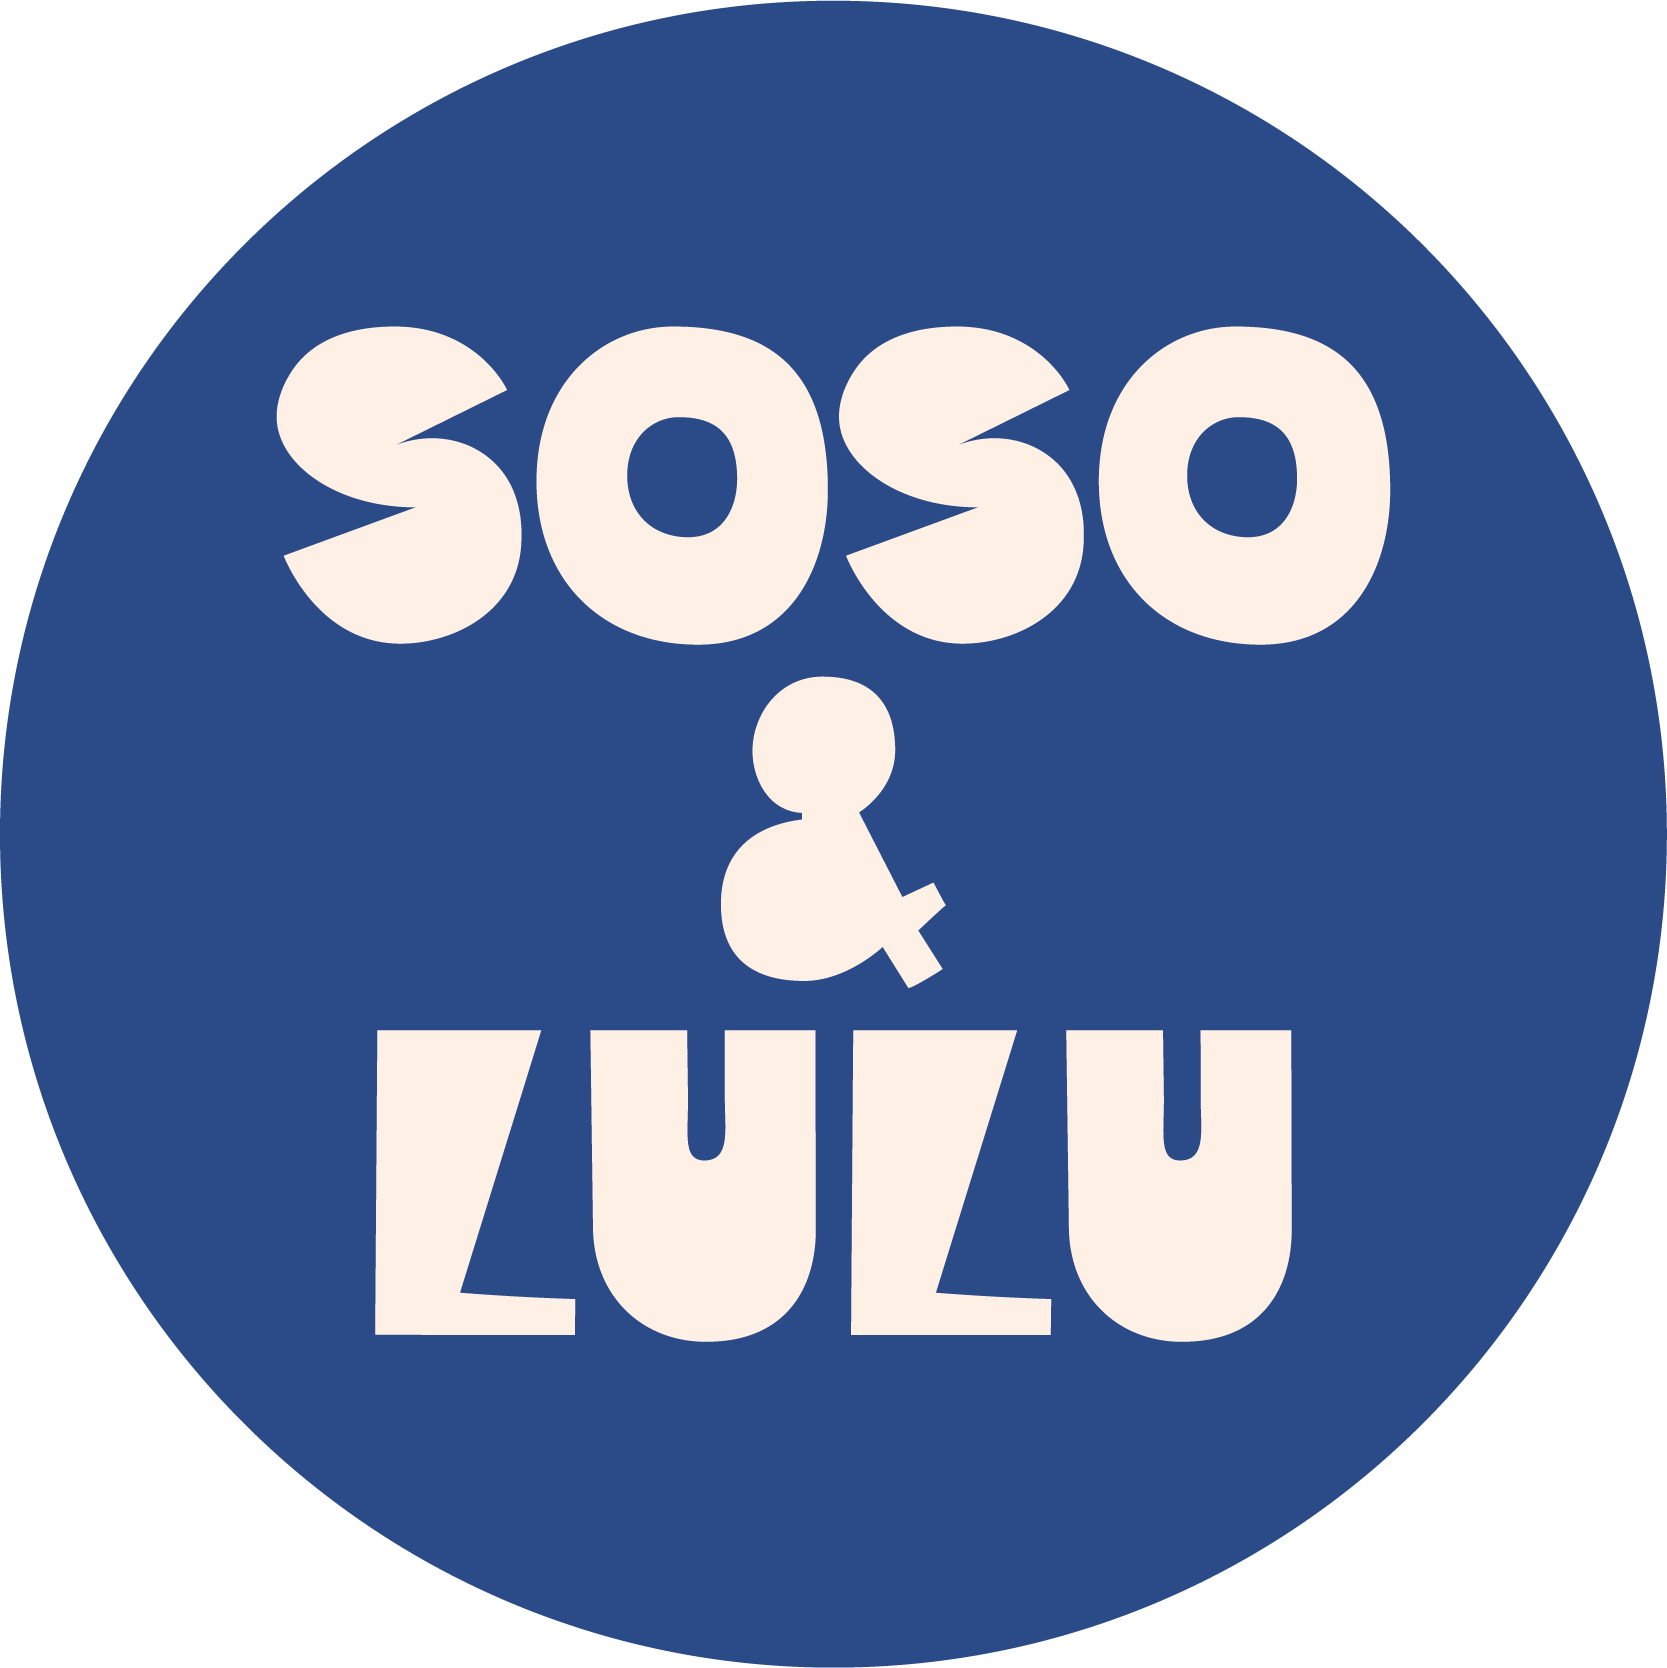 Soso et Lulu le podcast. Argent. Soso & Lulu.